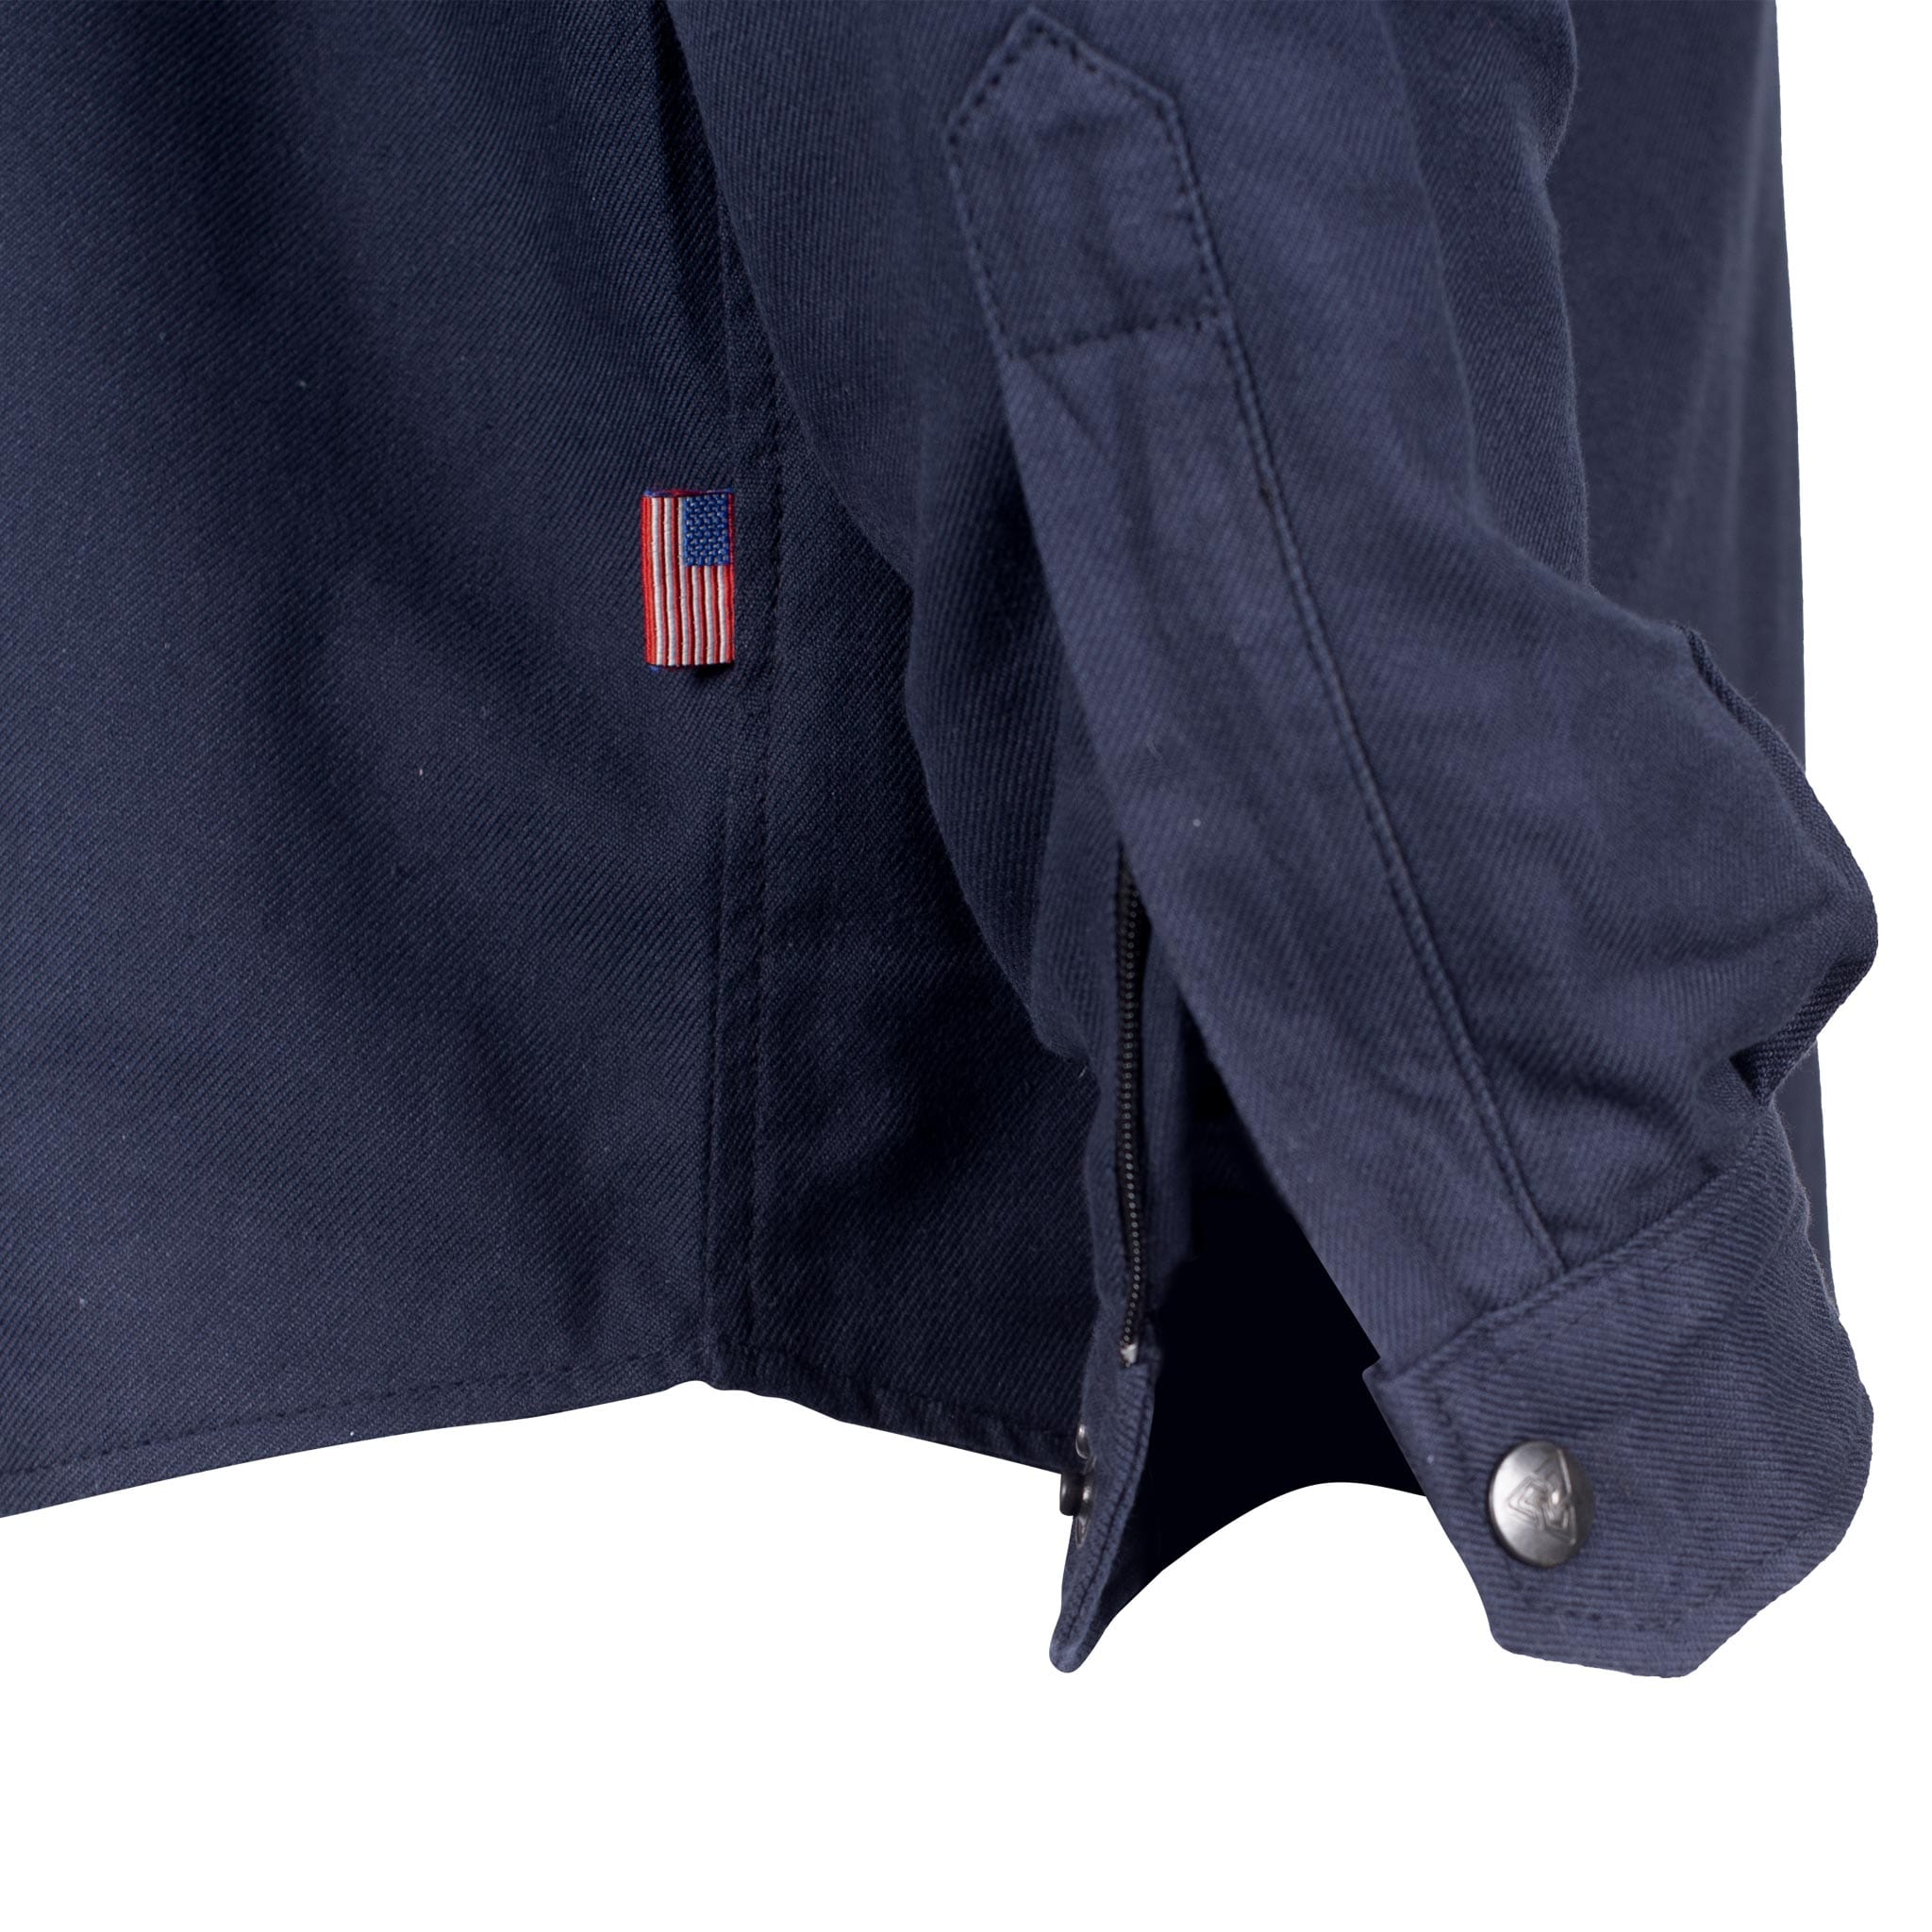 2022 Collection SALE Flannel Shirt - Dark Navy Blue Solid